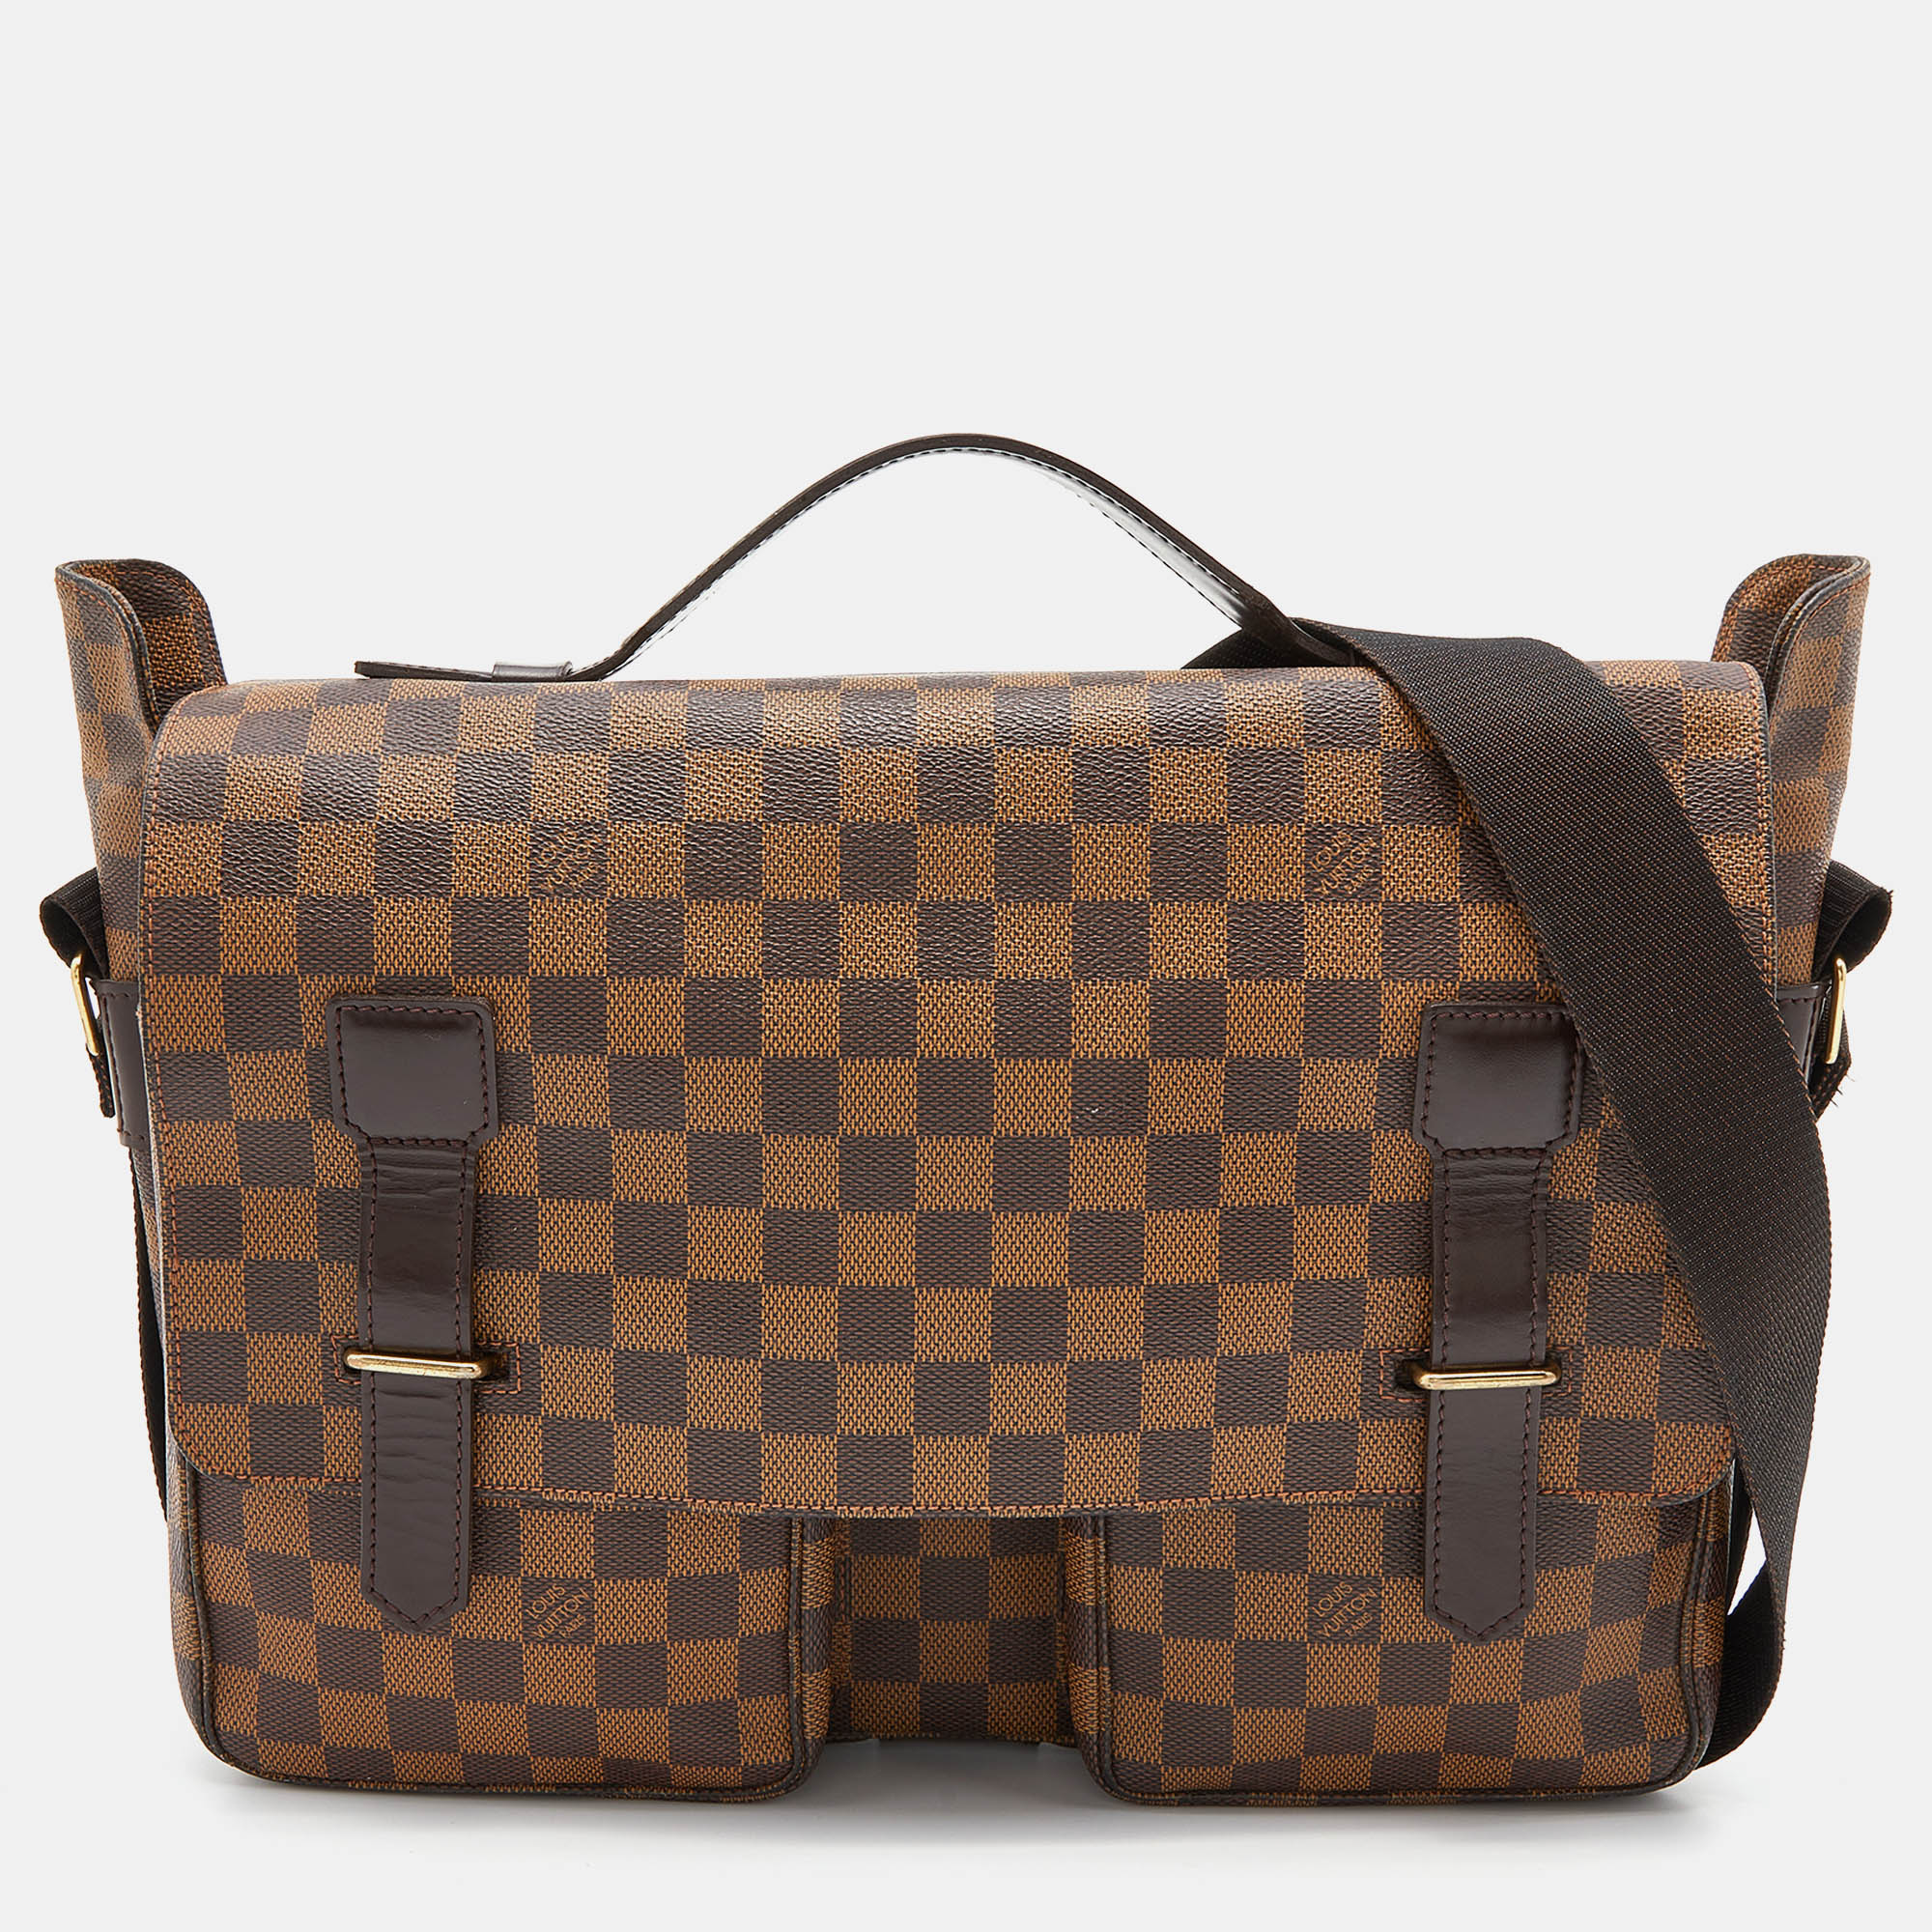 Pre-Owned Louis Vuitton Broadway Damier Ebene Shoulder Bag - Very Good  Condition 